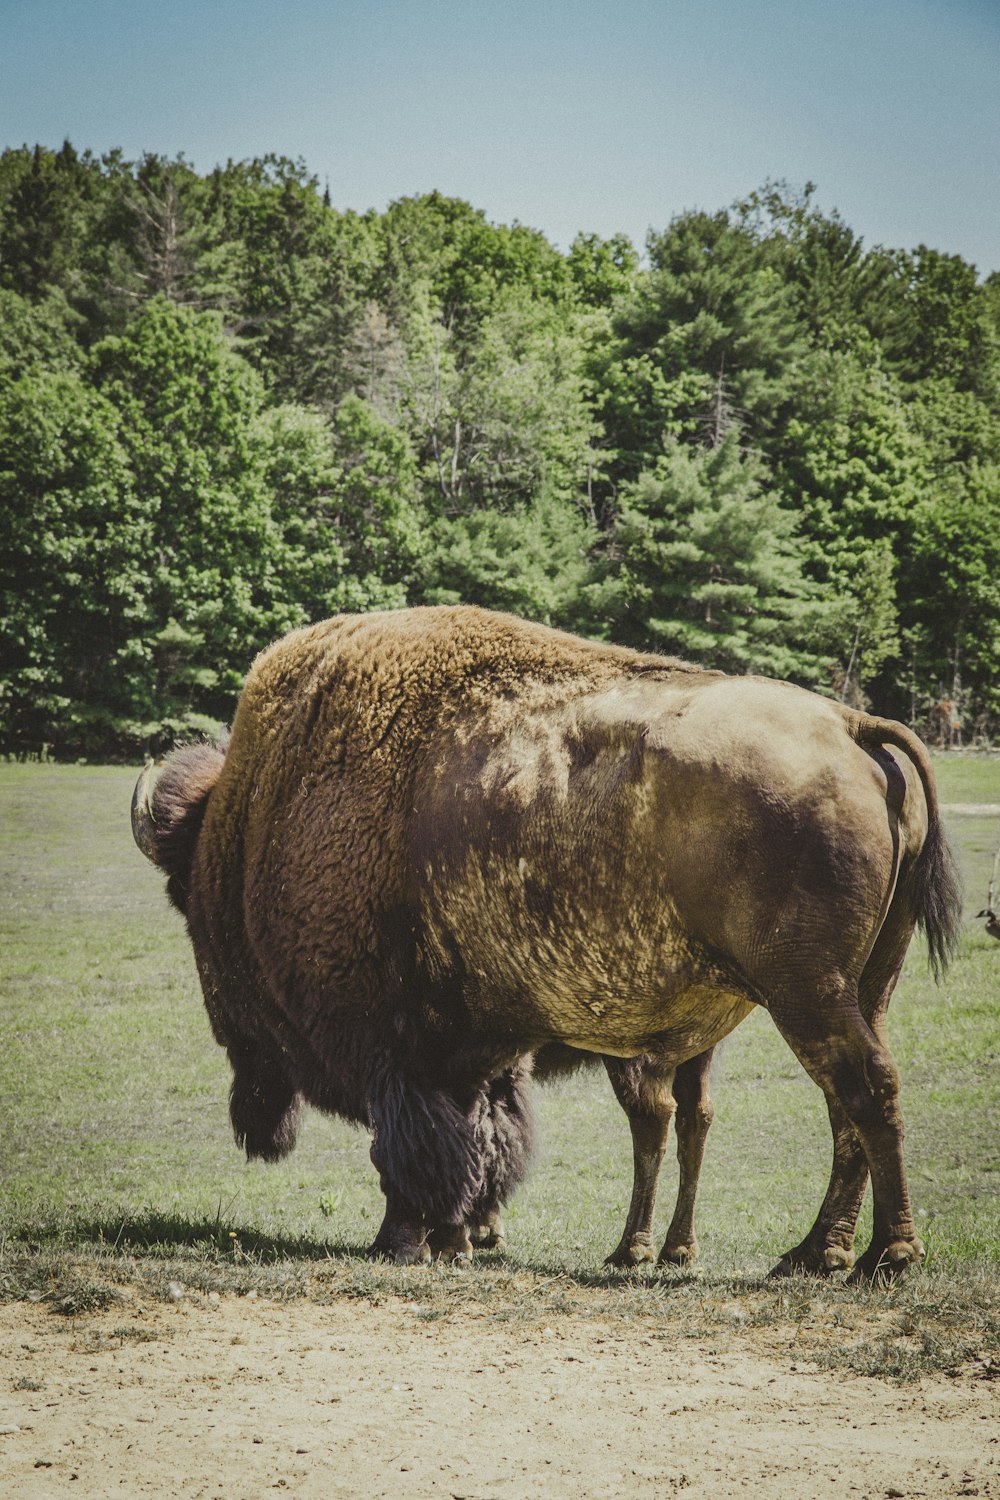 adult bison on grass field